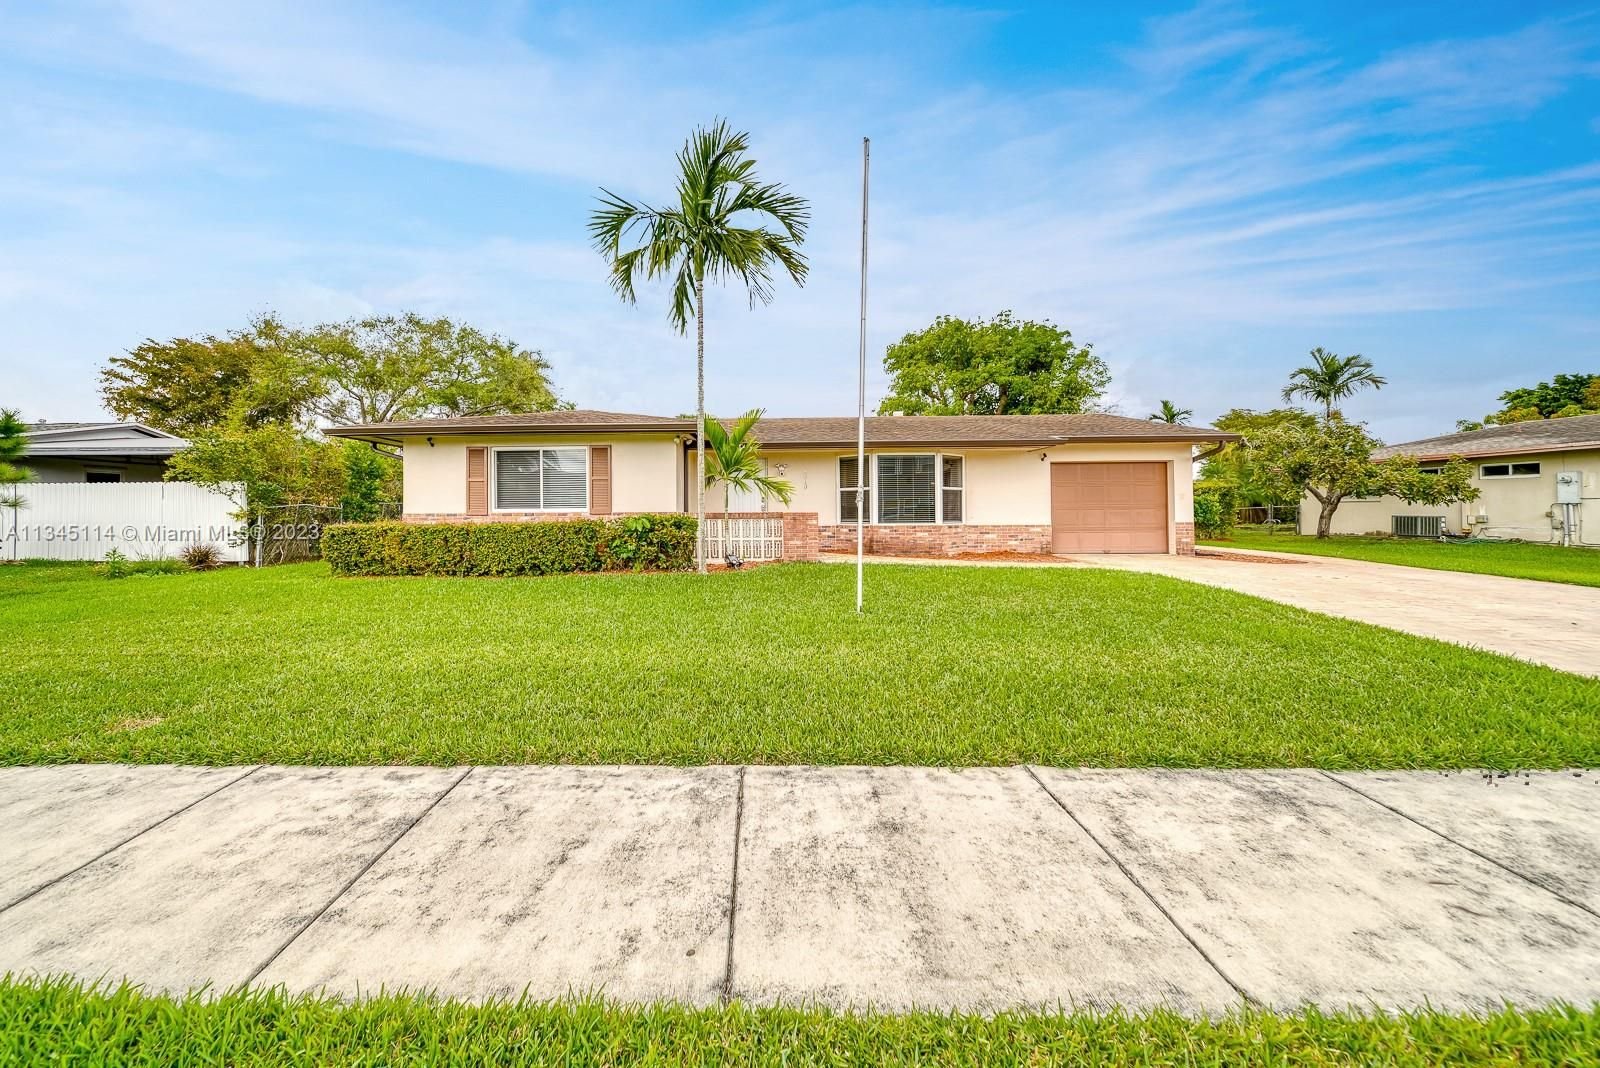 Real estate property located at 8010 138th Ct, Miami-Dade County, Miami, FL